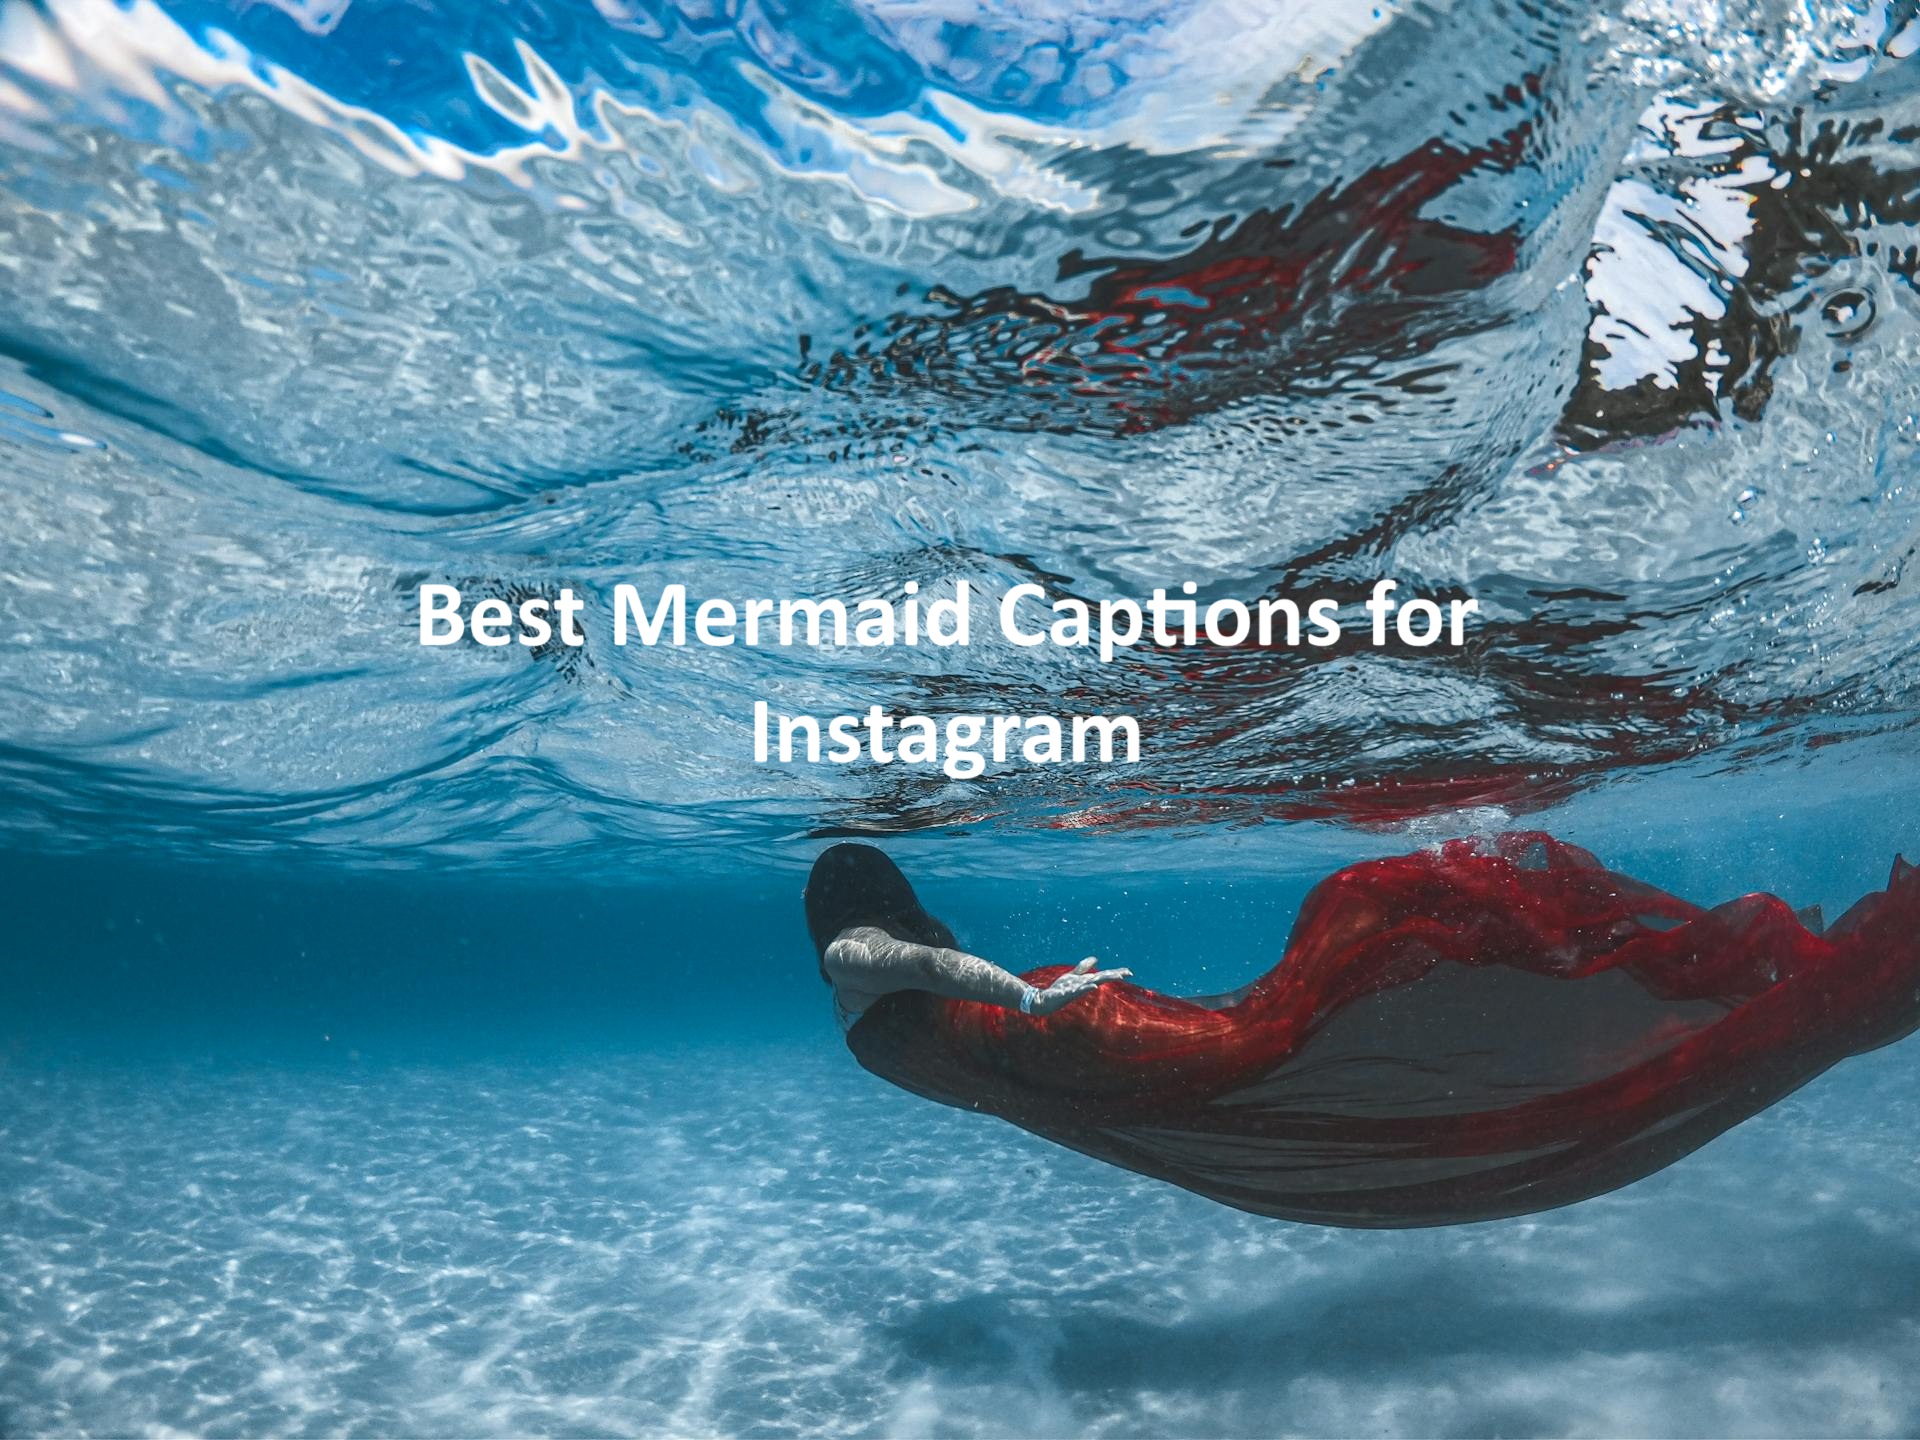 Mermaid Captions for Instagram